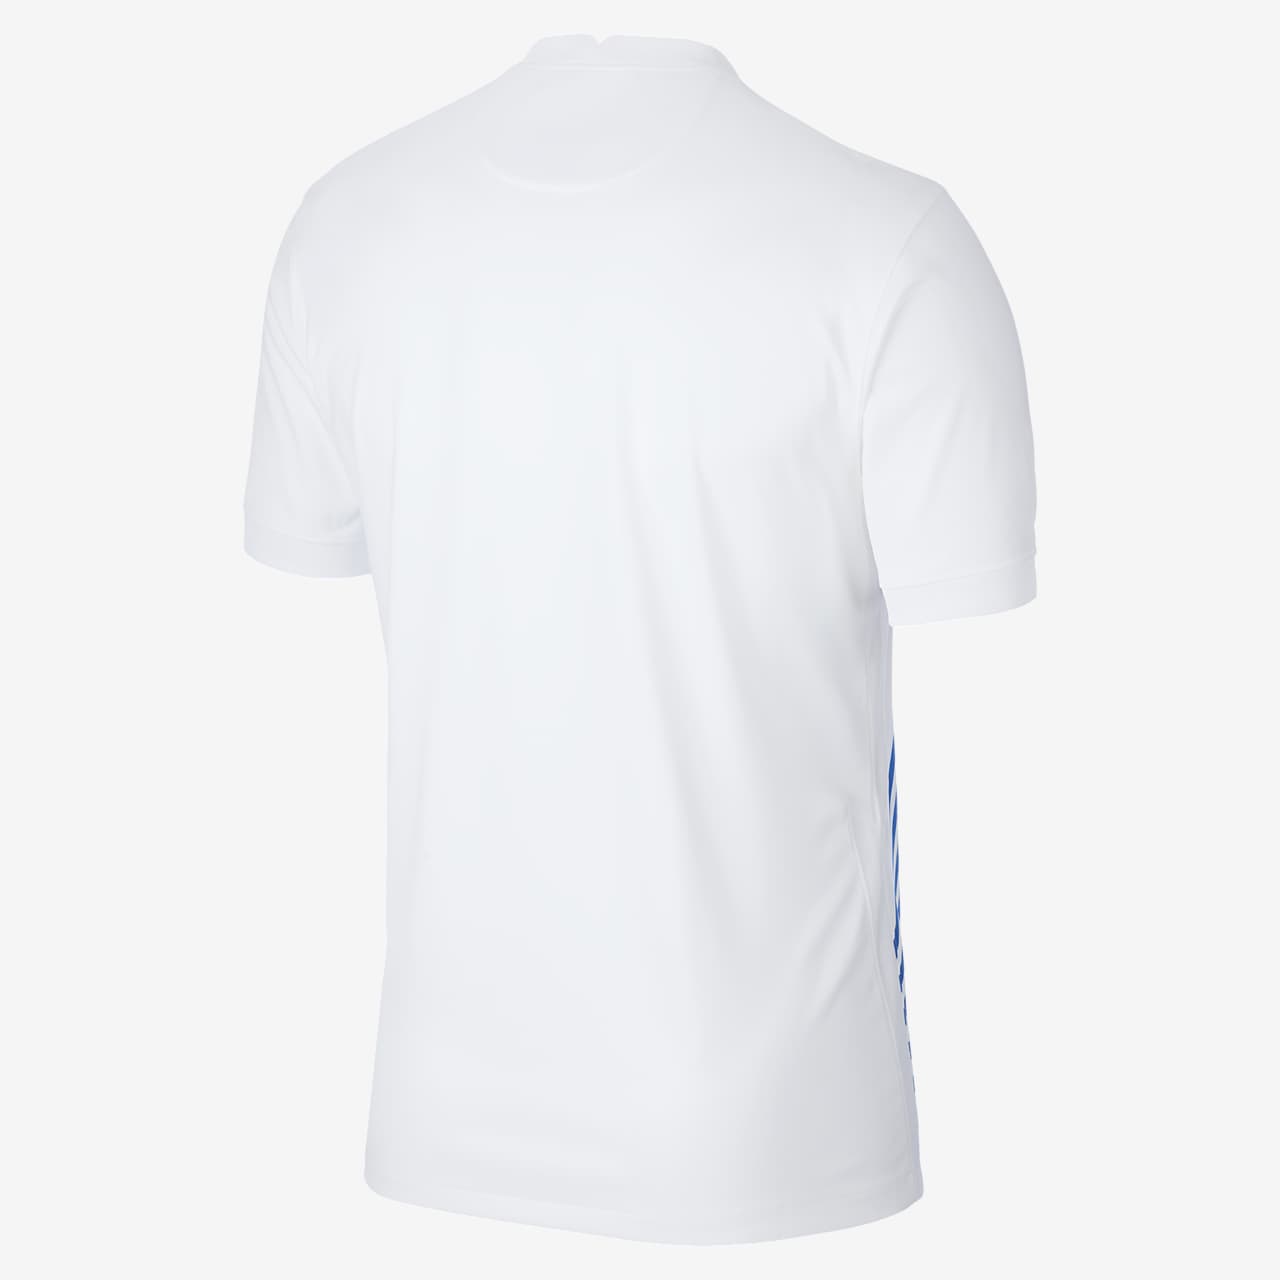 Greece 2020 Nike Home Shirt | 20/21 Kits | Football shirt blog